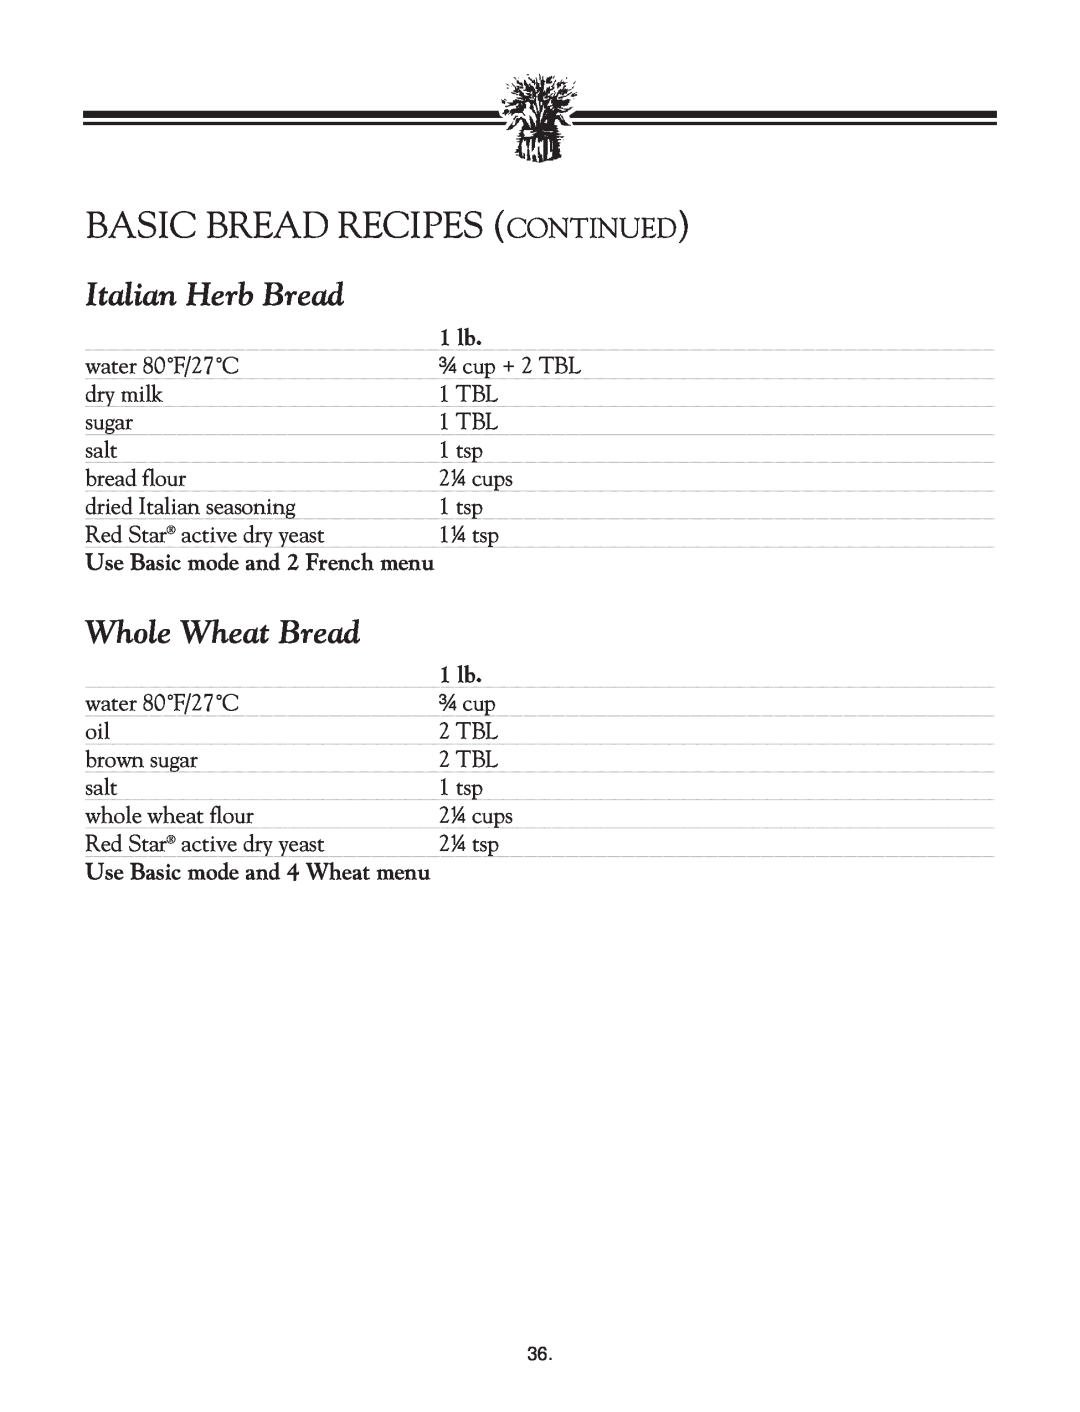 Breadman TR2828G instruction manual Italian Herb Bread, Whole Wheat Bread, Basic Bread Recipes Continued, 1 lb 